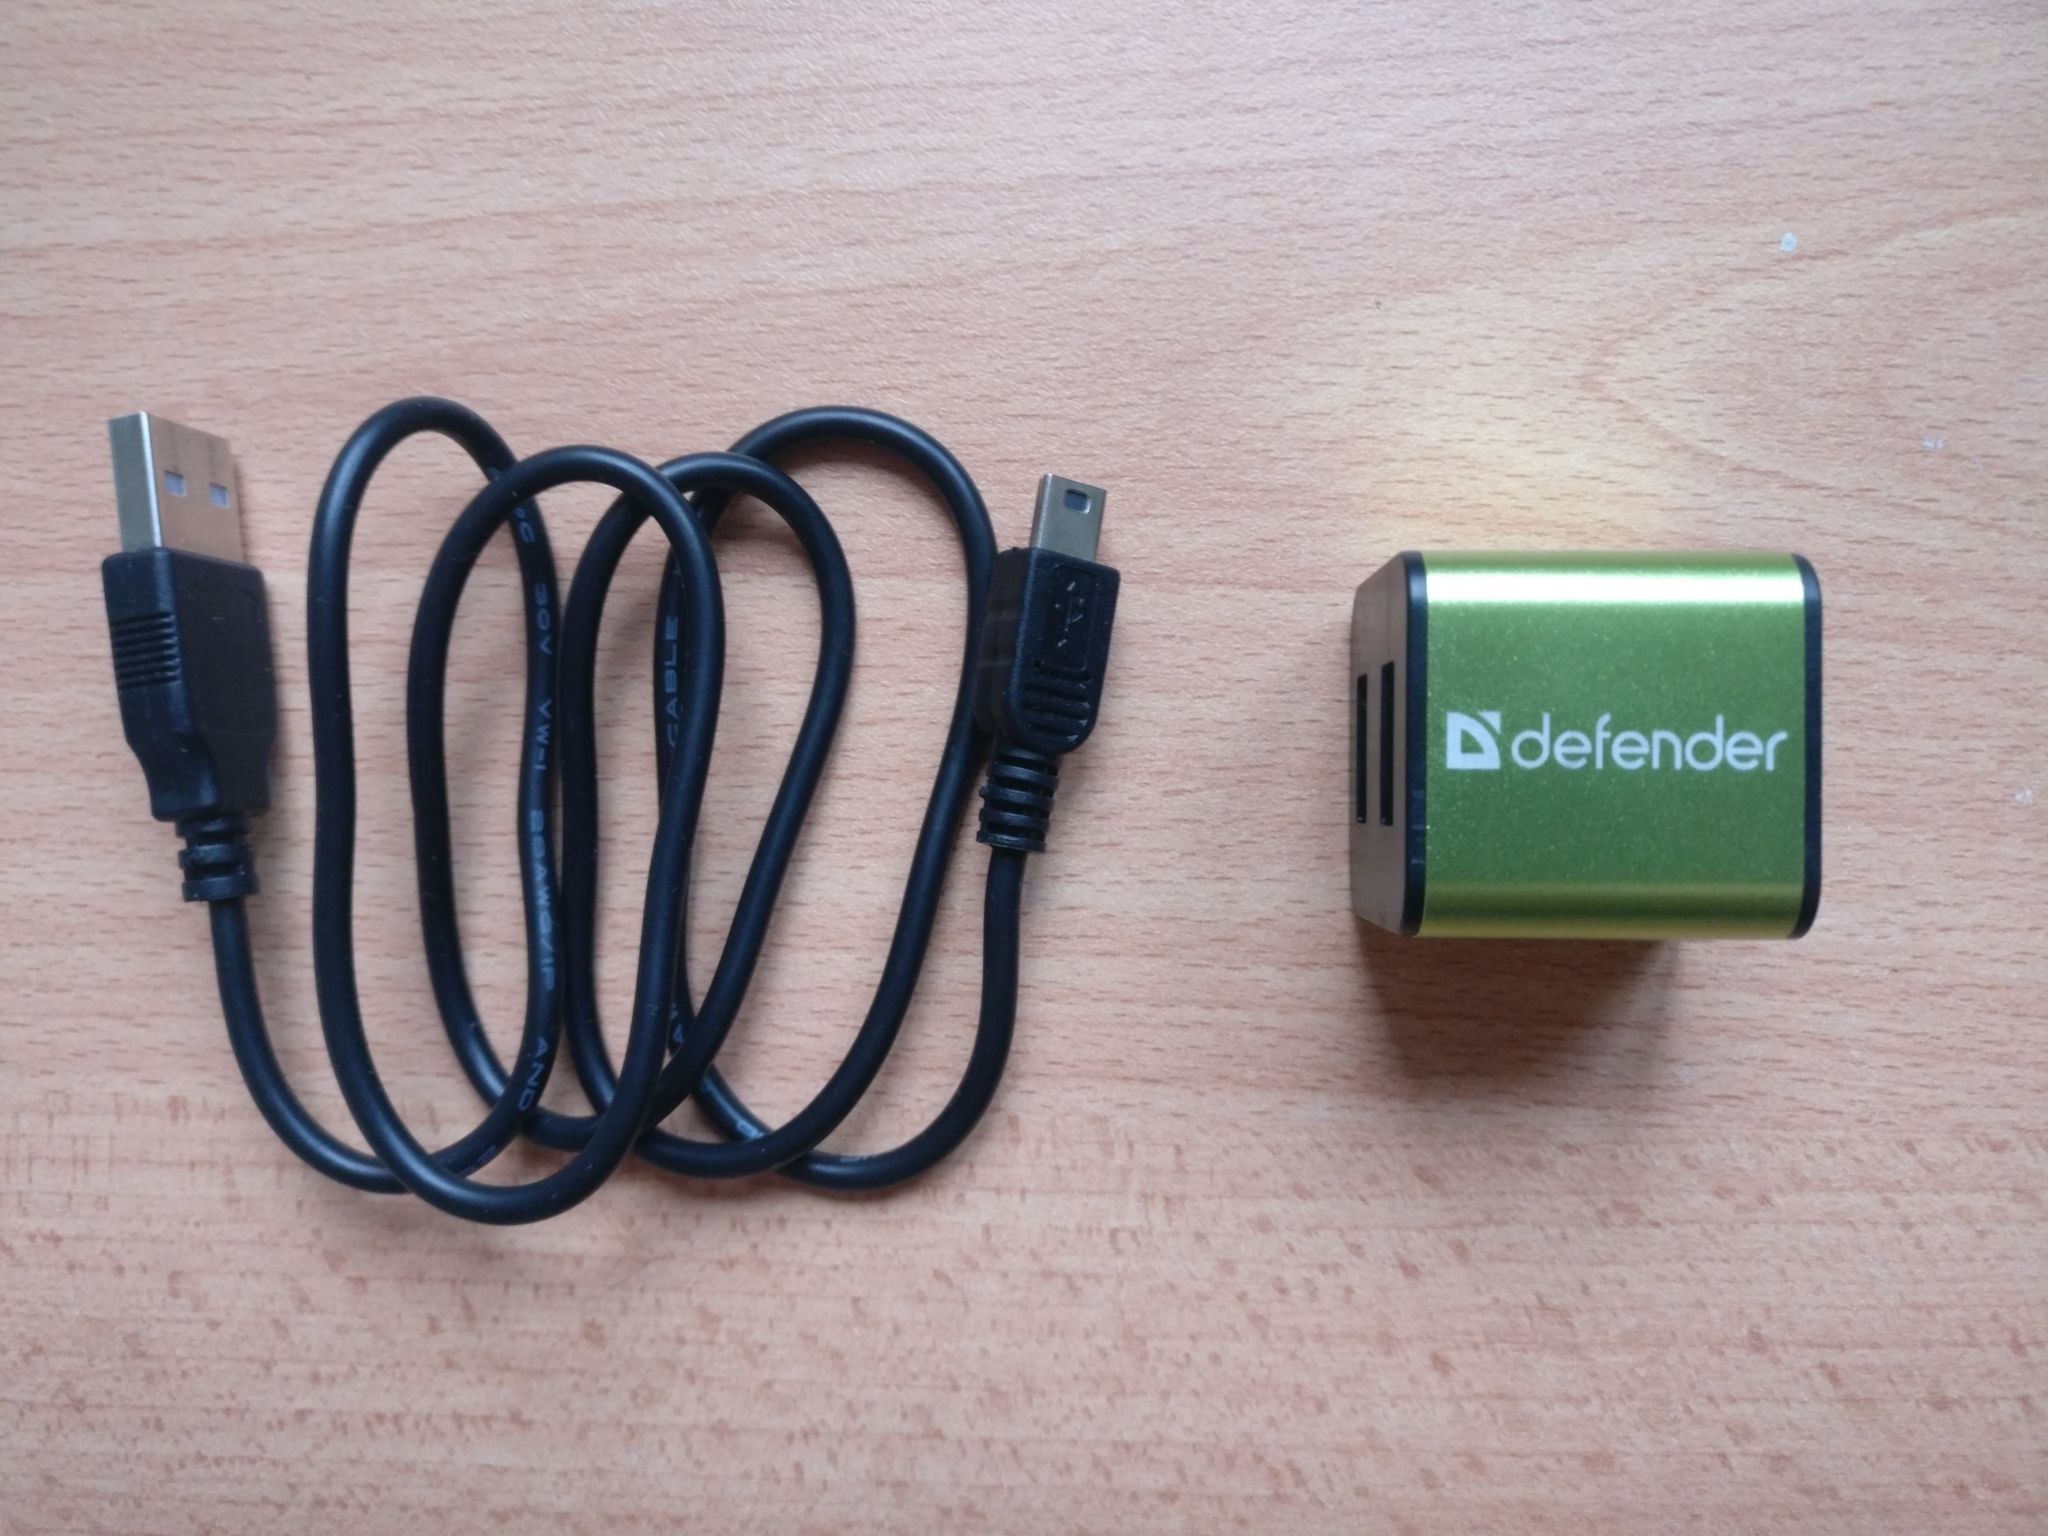 Defender quadro. Концентратор USB 2.0 Defender Quadro Iron. Разветвитель Defender Quadro Iron USB2.0. Разветвитель USB Defender Quadro Power (83503). USB-хаб Defender Quadro PROMT, USB 2.0, 4 порта.